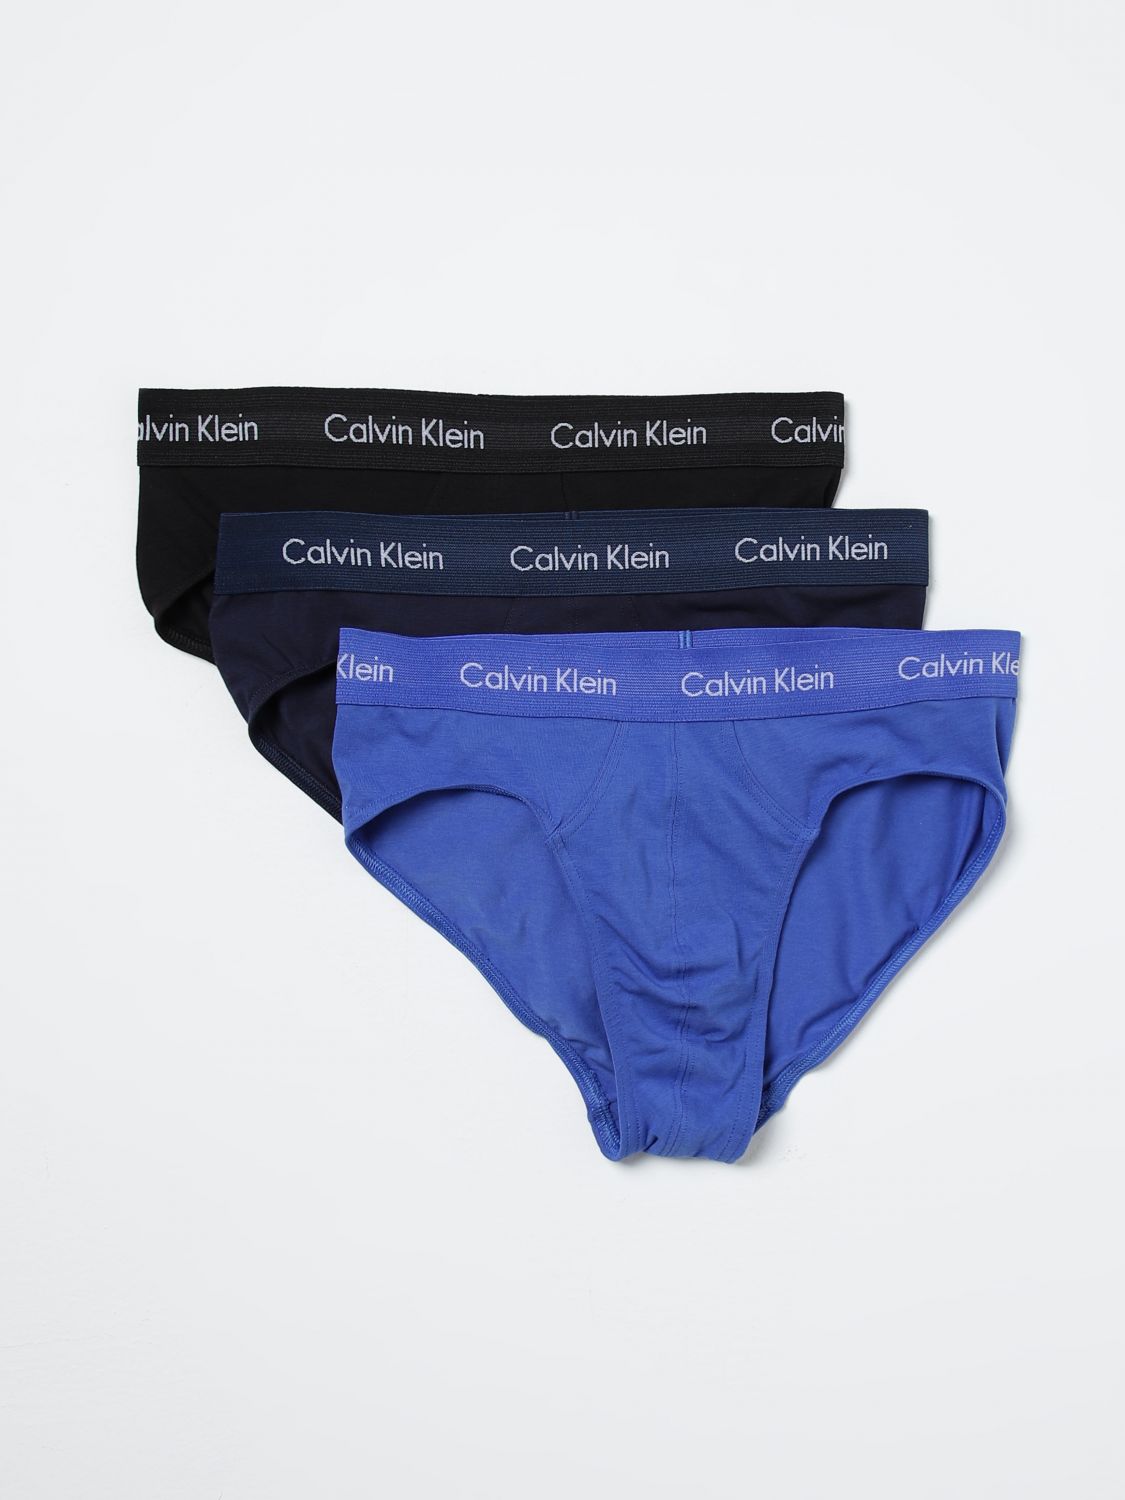 Calvin Klein Underwear CALVIN KLEIN Men color Black 1